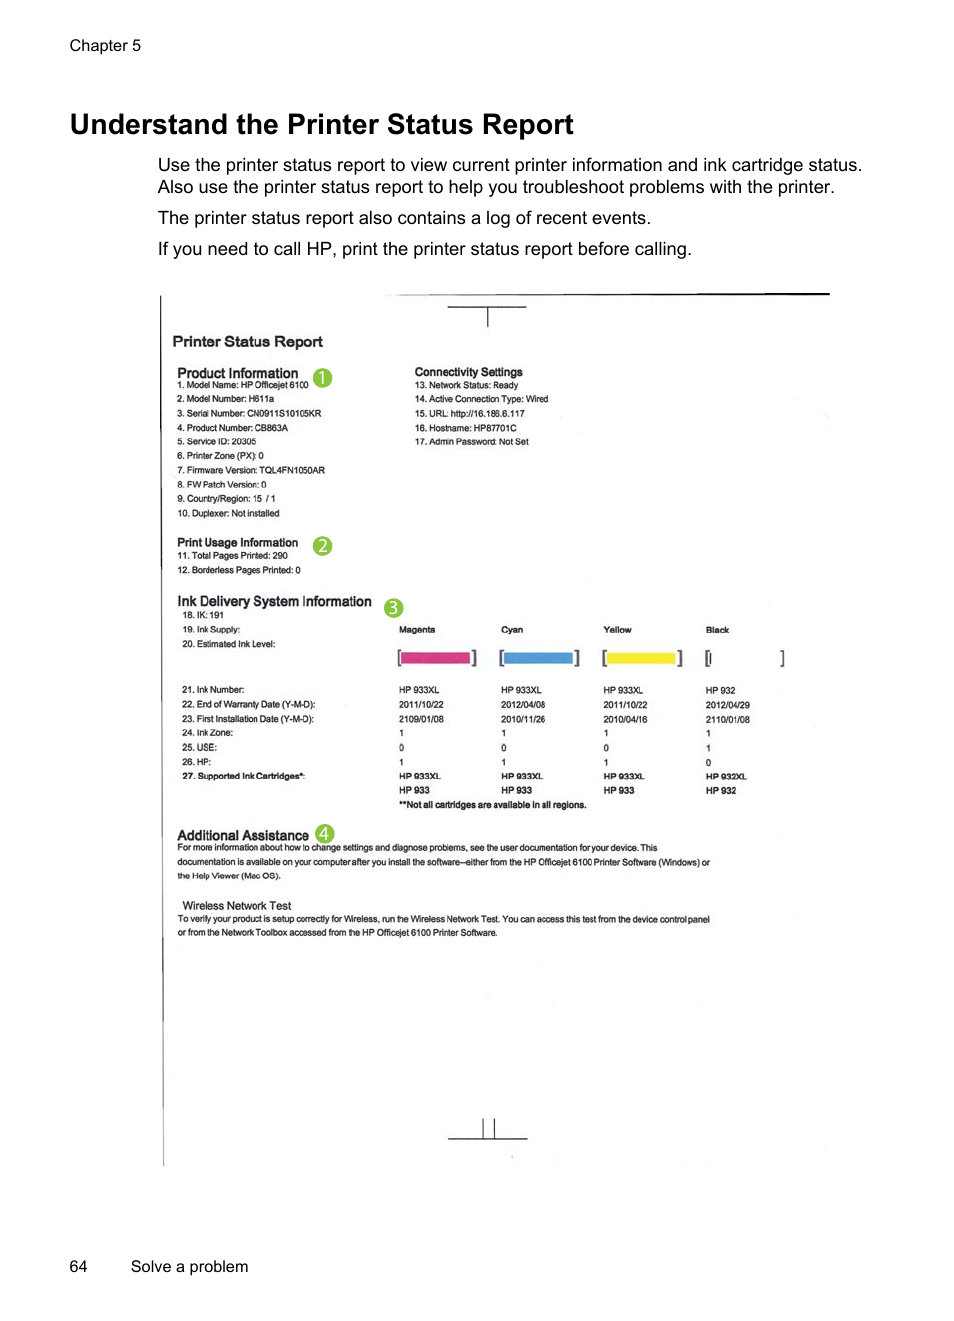 Understand the printer status report | HP Officejet 6100 User Manual